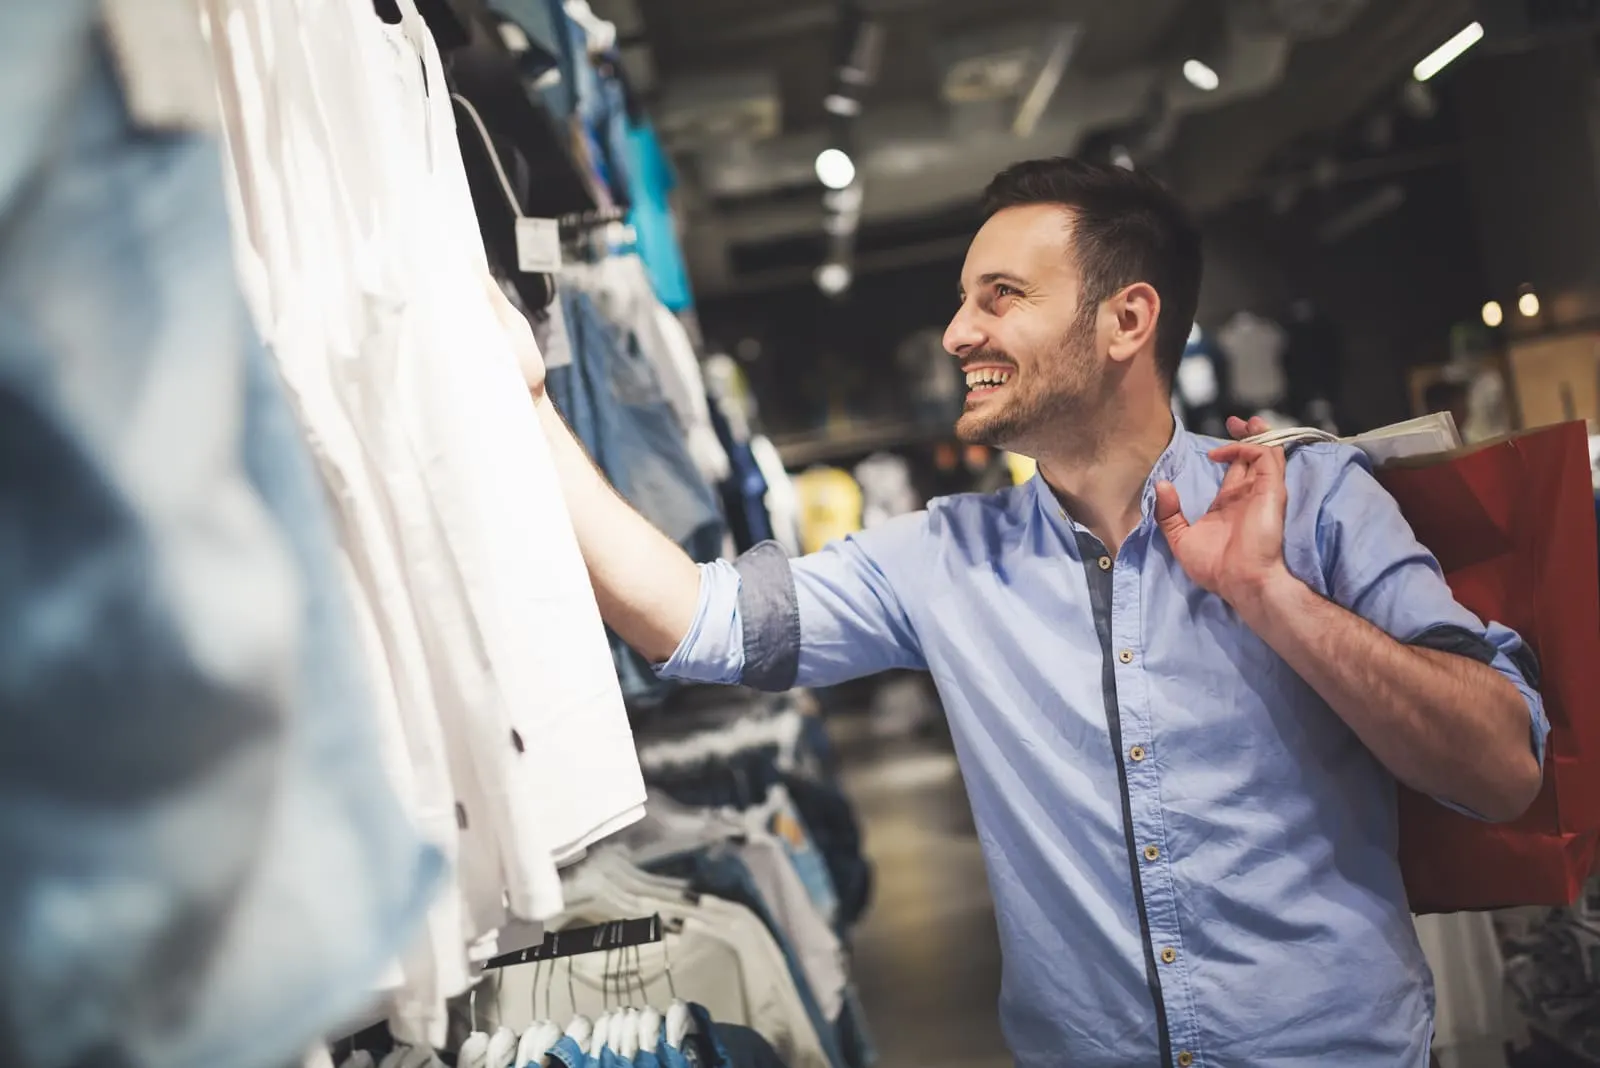 a smiling man in shopping looking at shirts